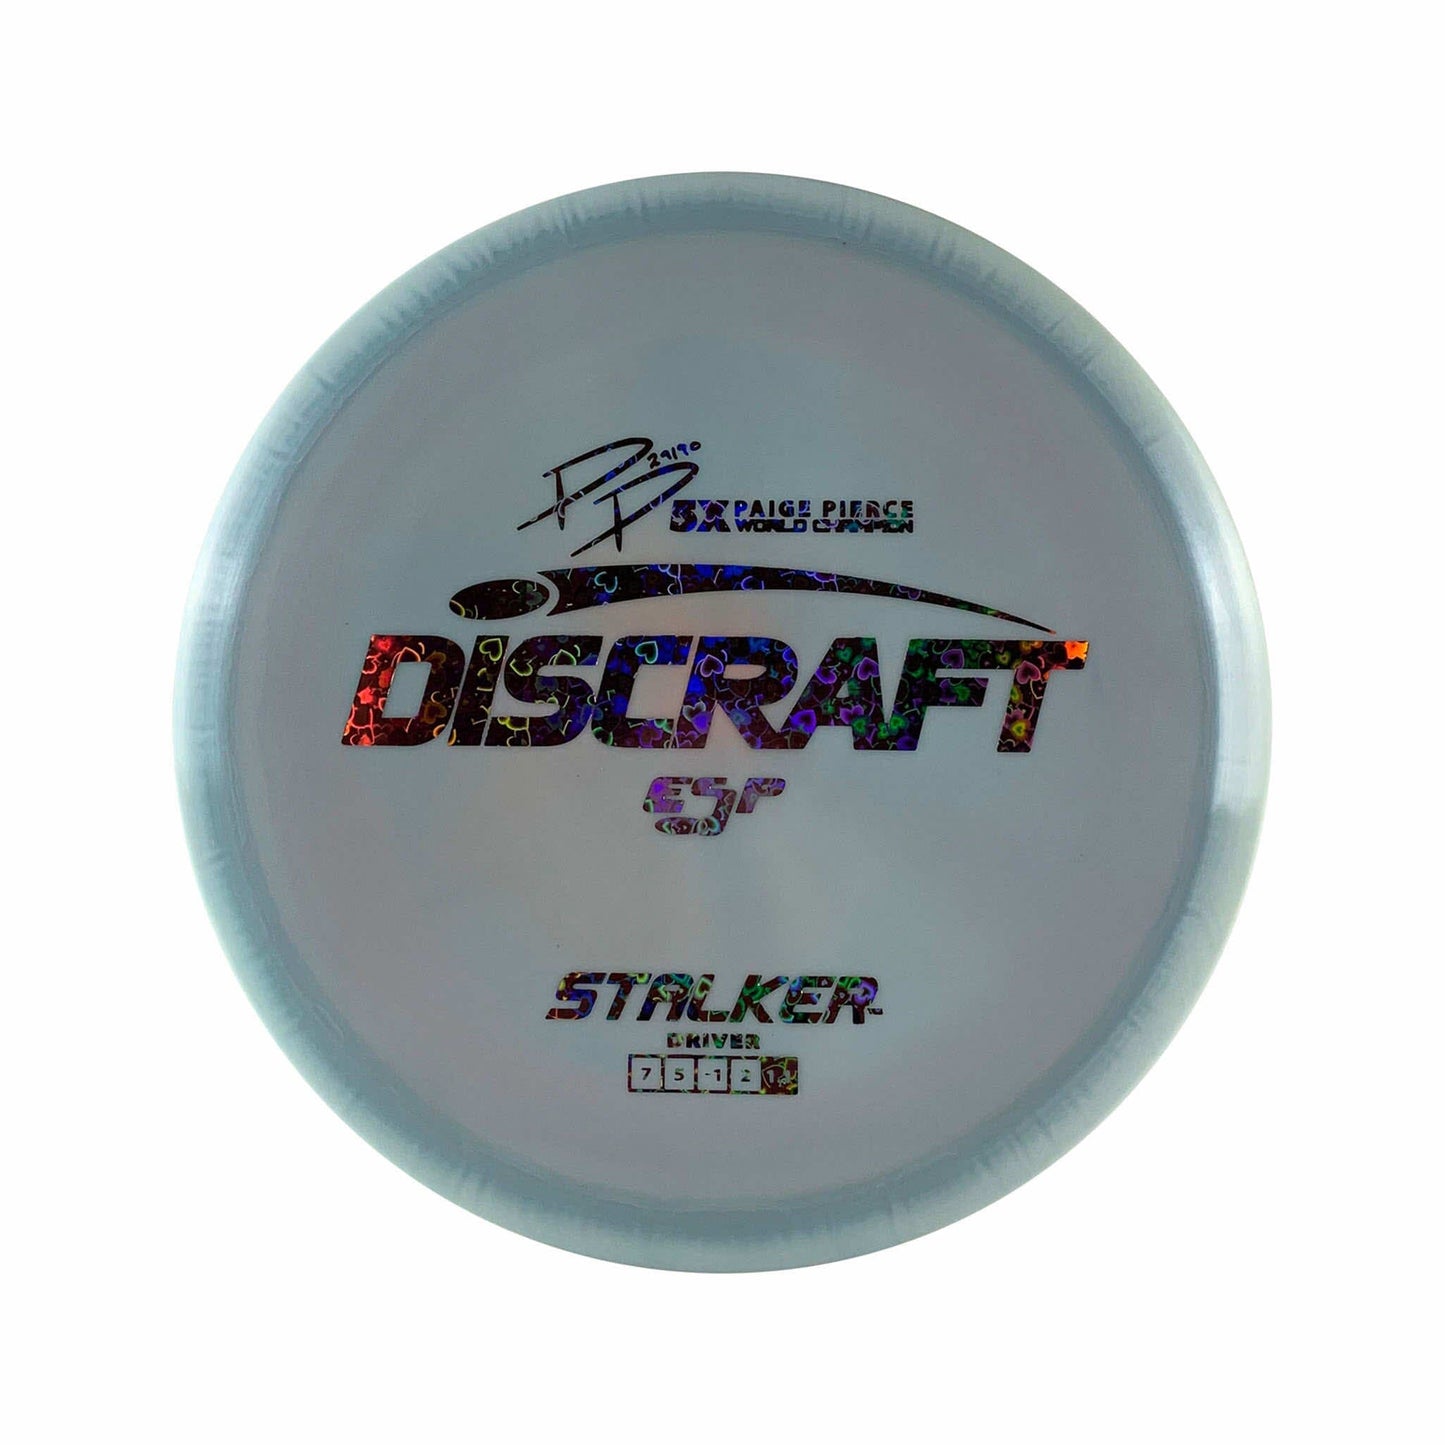 ESP Stalker - Paige Pierce 5x Disc Discraft sky blue 175 